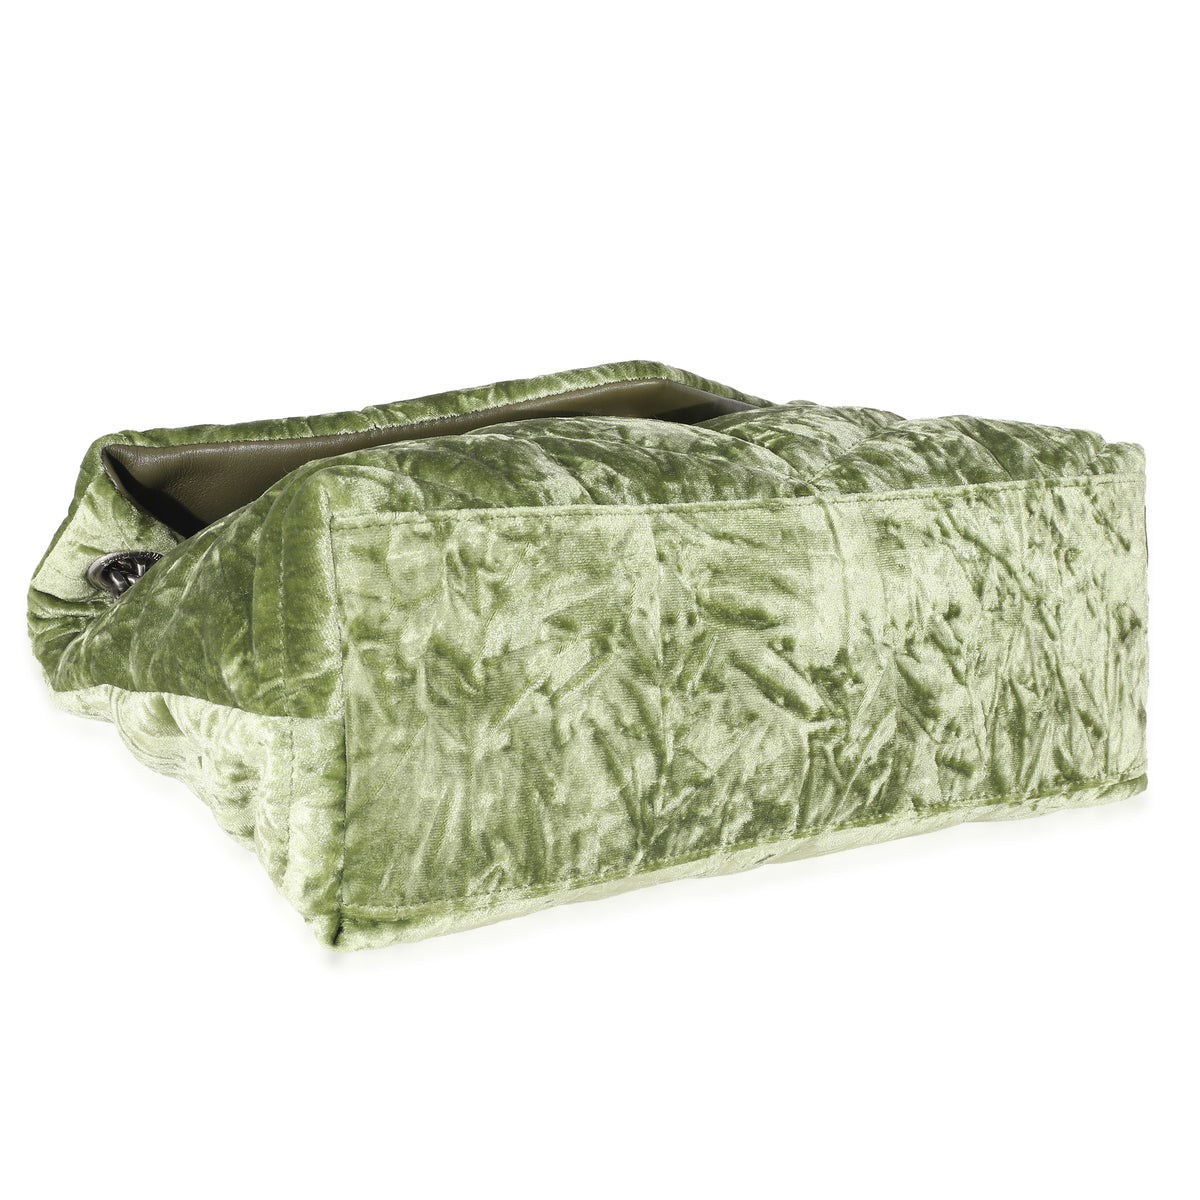 Saint Laurent Small Puffer Crushed Velvet Shoulder Bag - Emerald/Vert